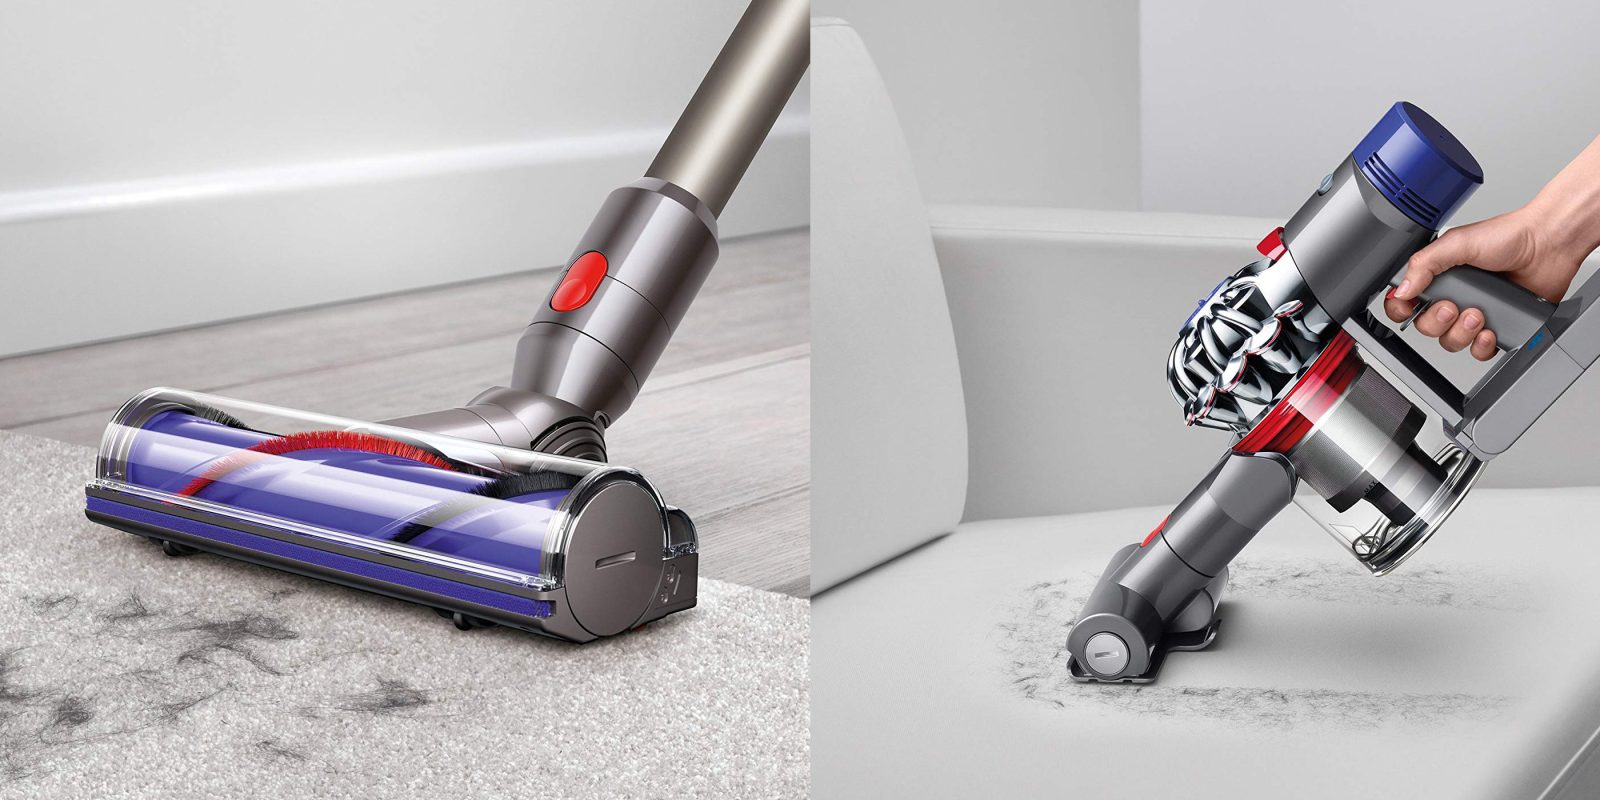 Dyson v8 animal cordless stick vacuum cleaner